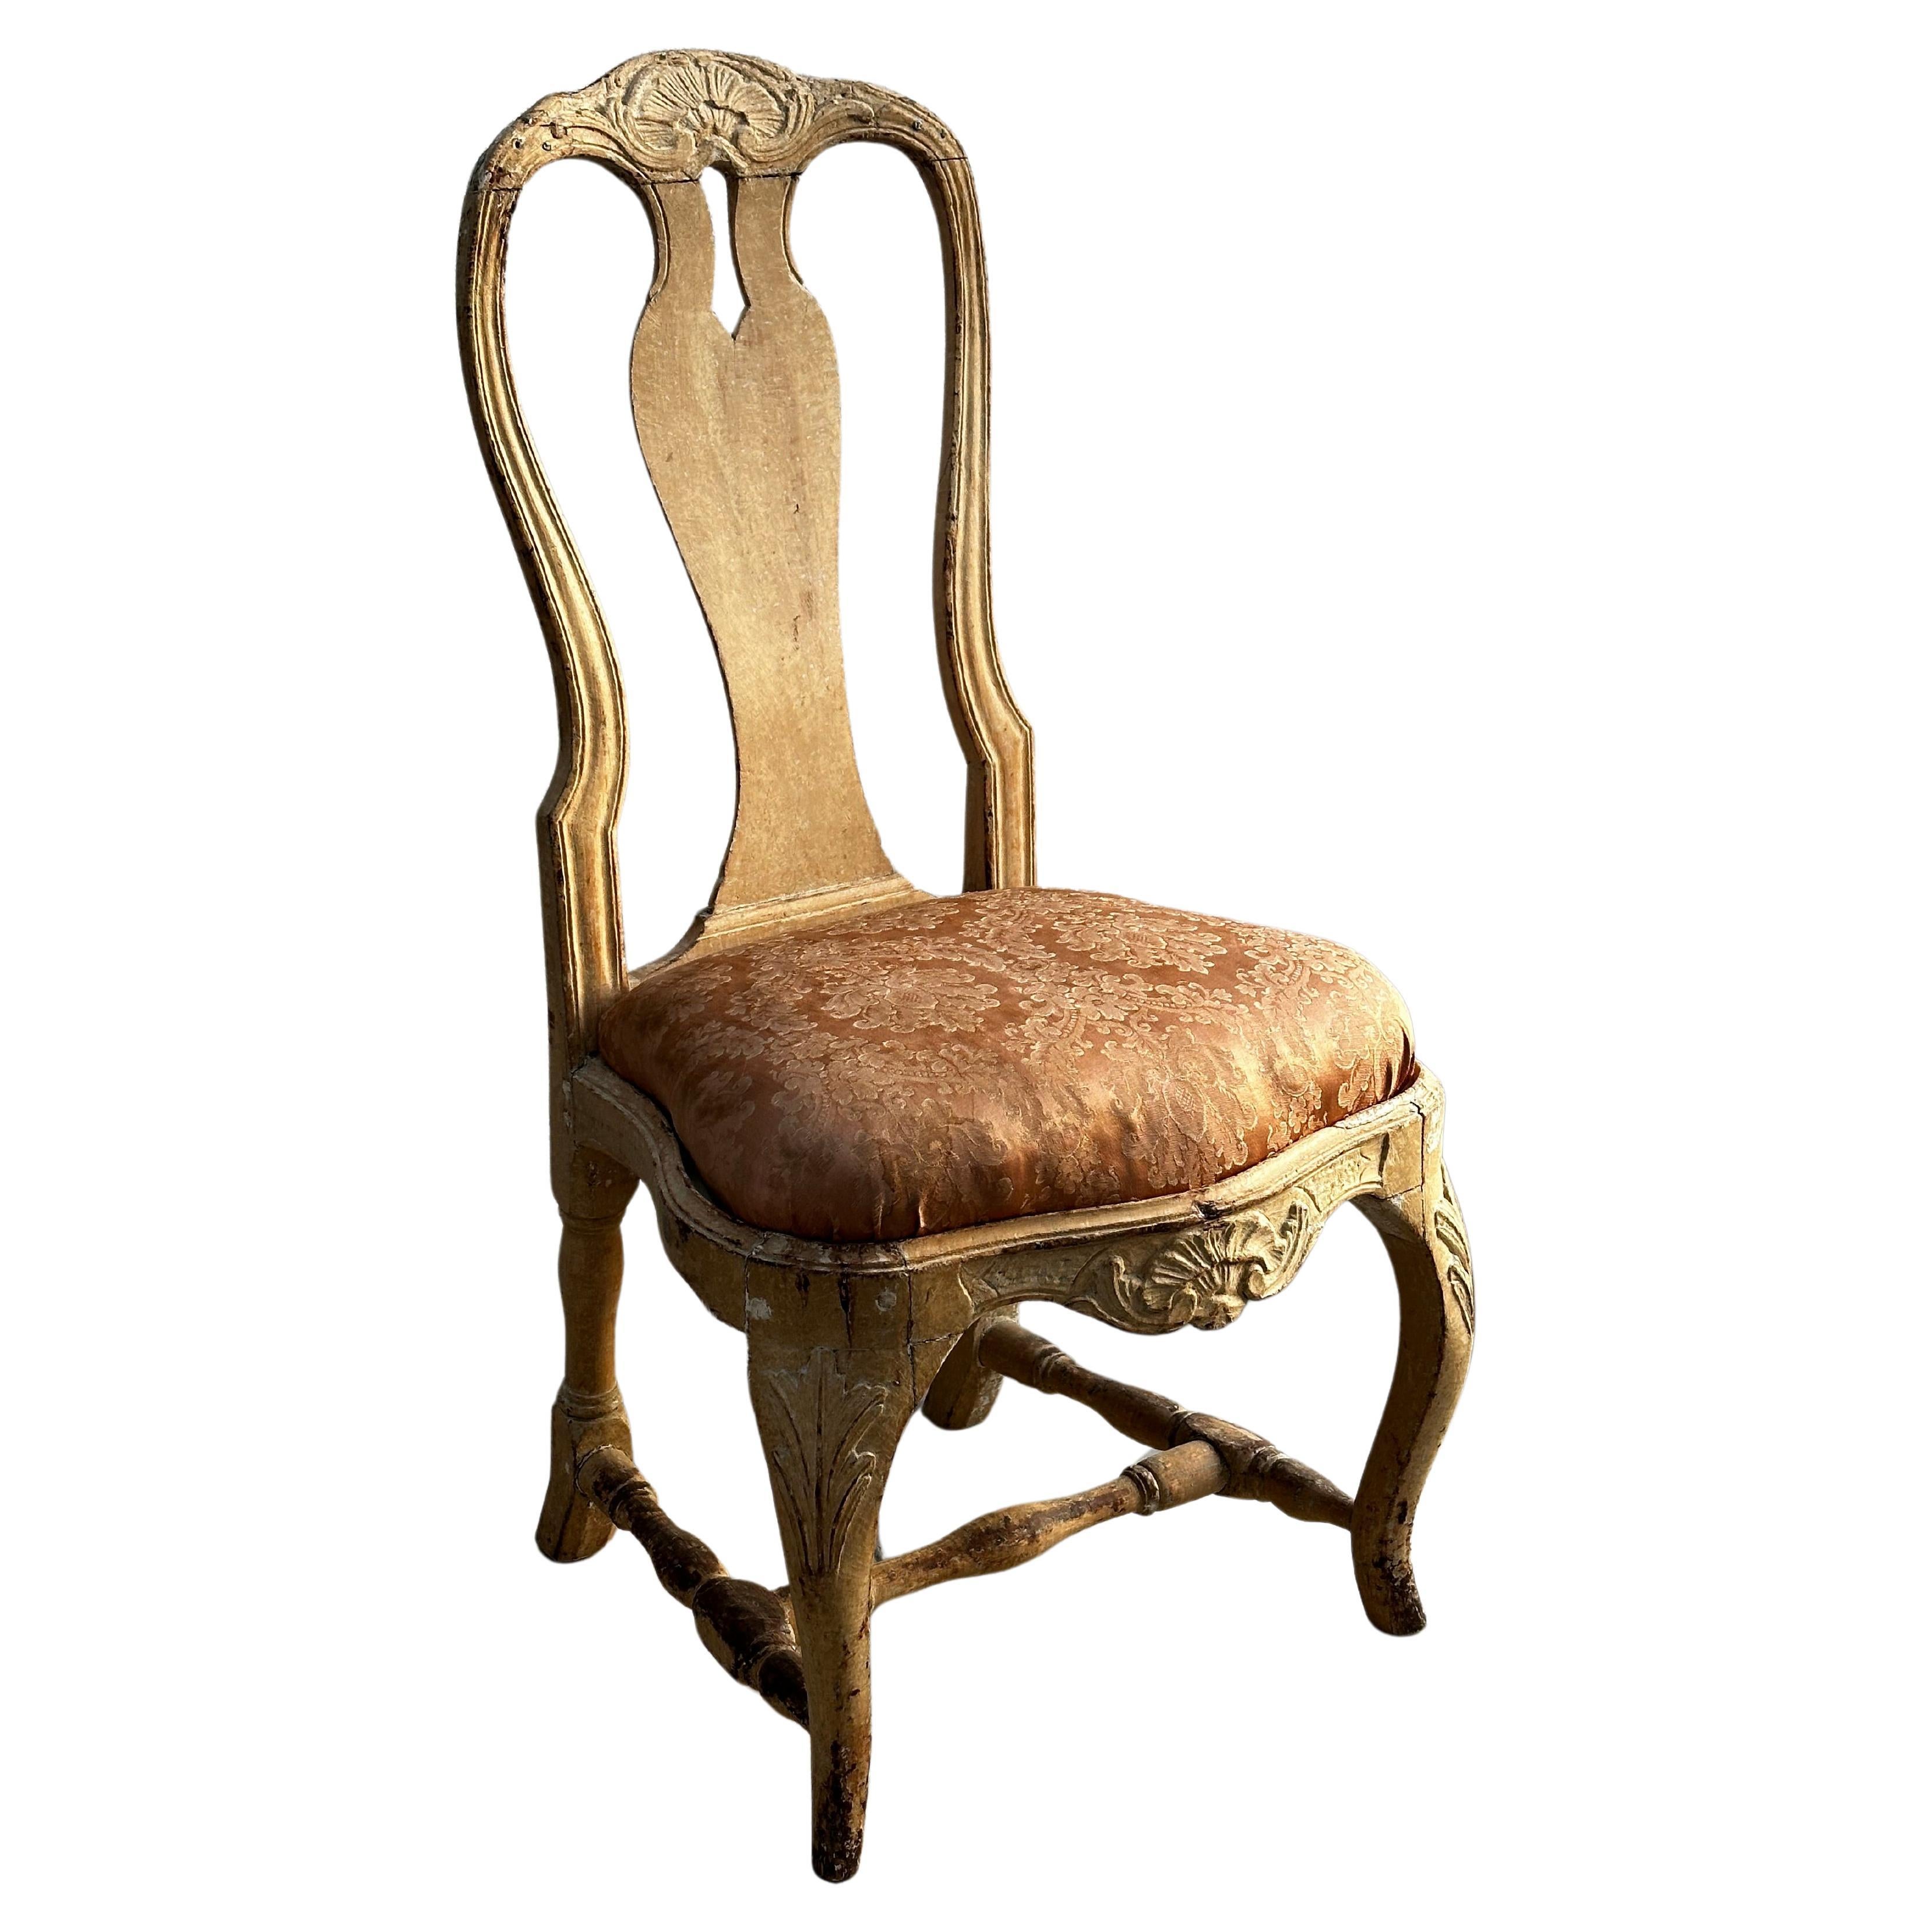 Rokoko-Stuhl aus dem 18. Jahrhundert, mit originaler Farbe